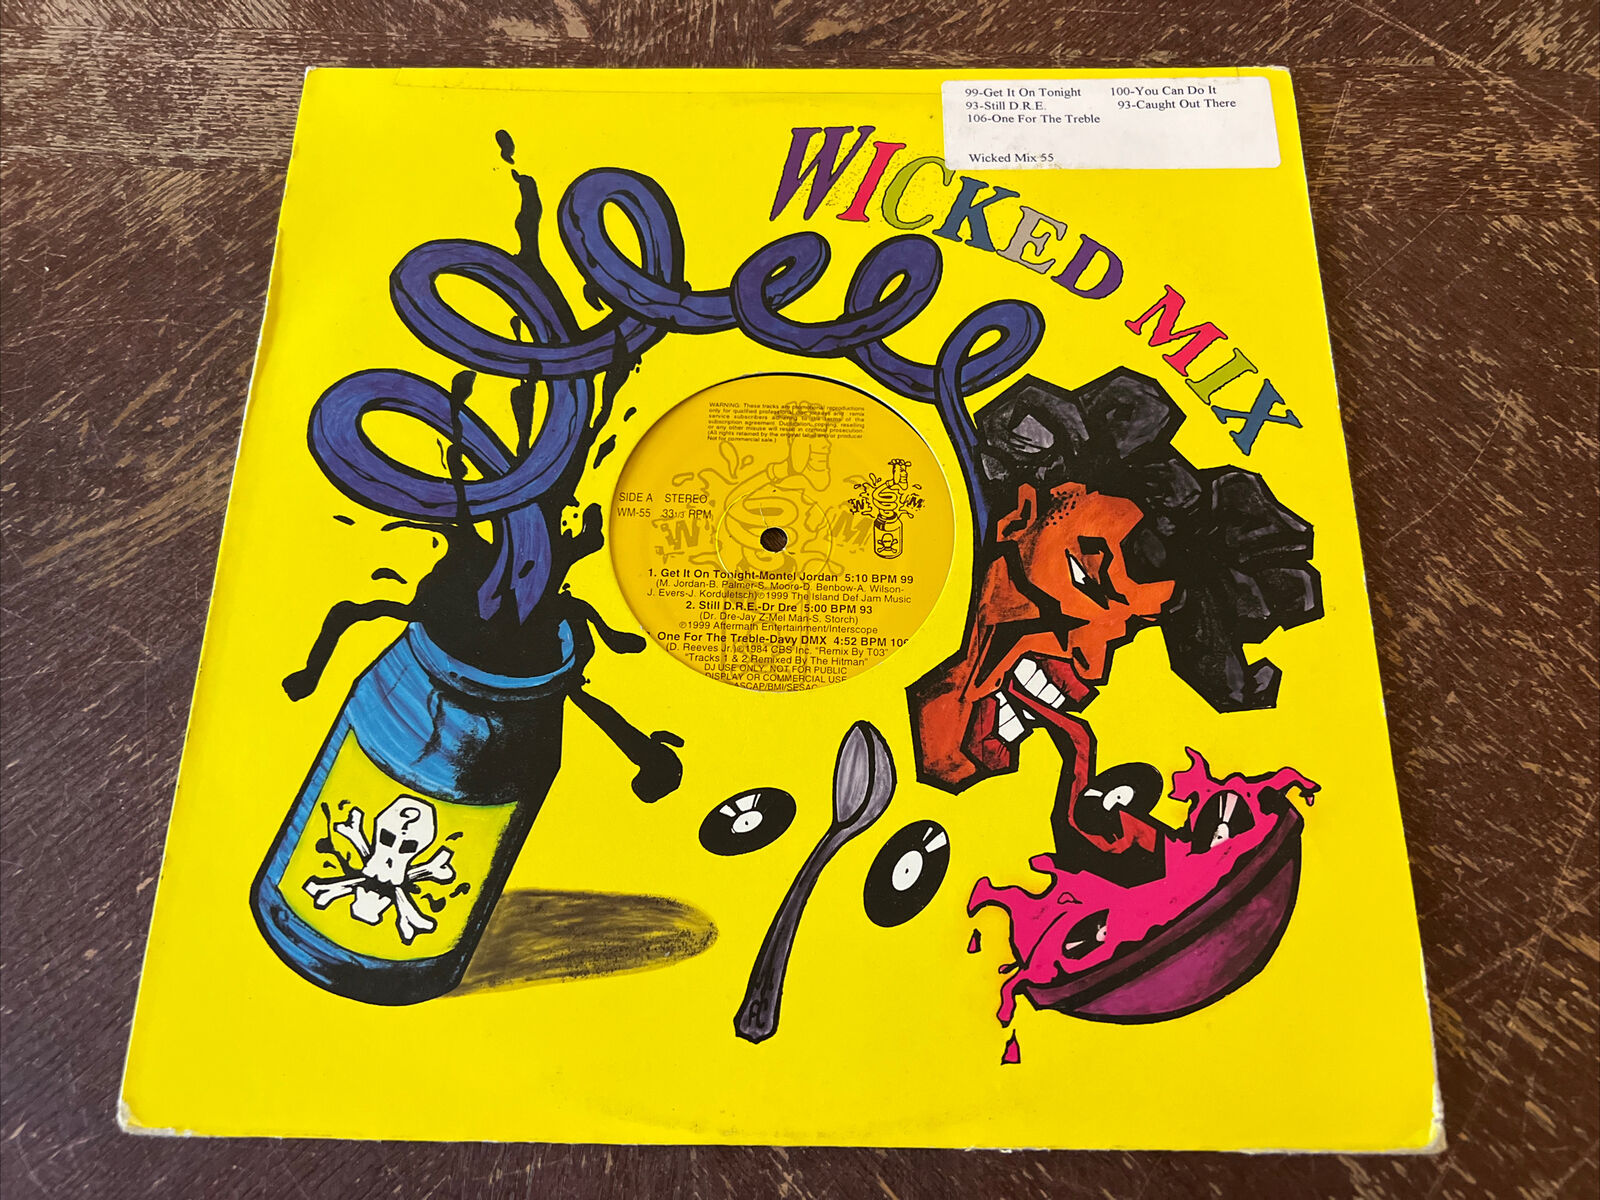 Wicked Mix DJ Vinyl Record WM- 55 - Montel Jordan, Dr. Dre, Ice Cube, Kelis…